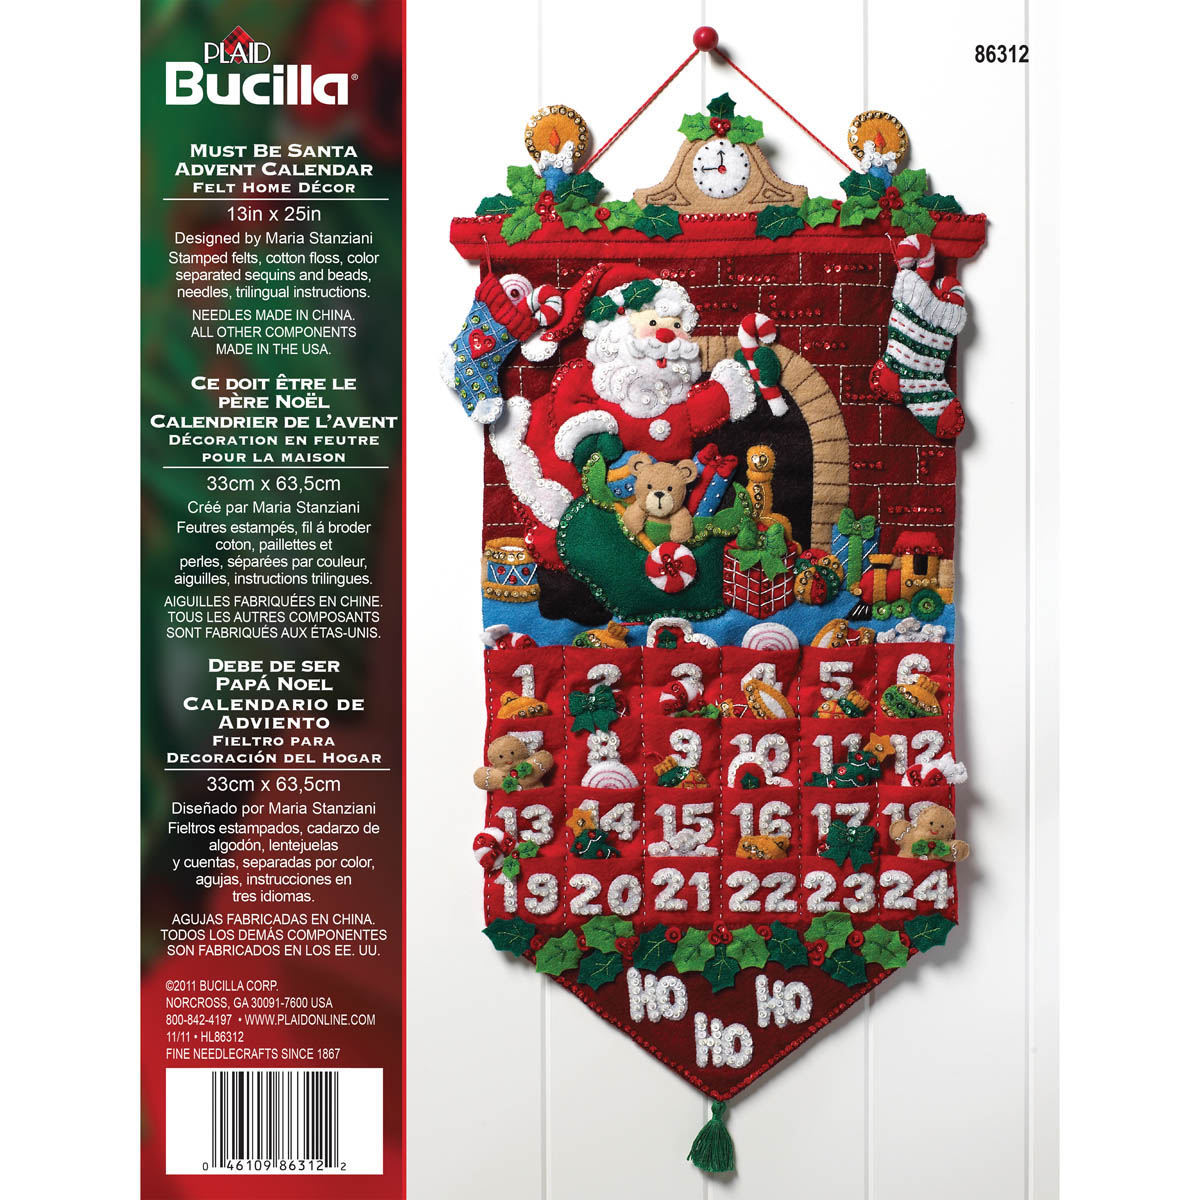 Bucilla CHRISTMAS ARK Felt Home Decor Kit 85333  14x11x6 when complete   New/Unopened